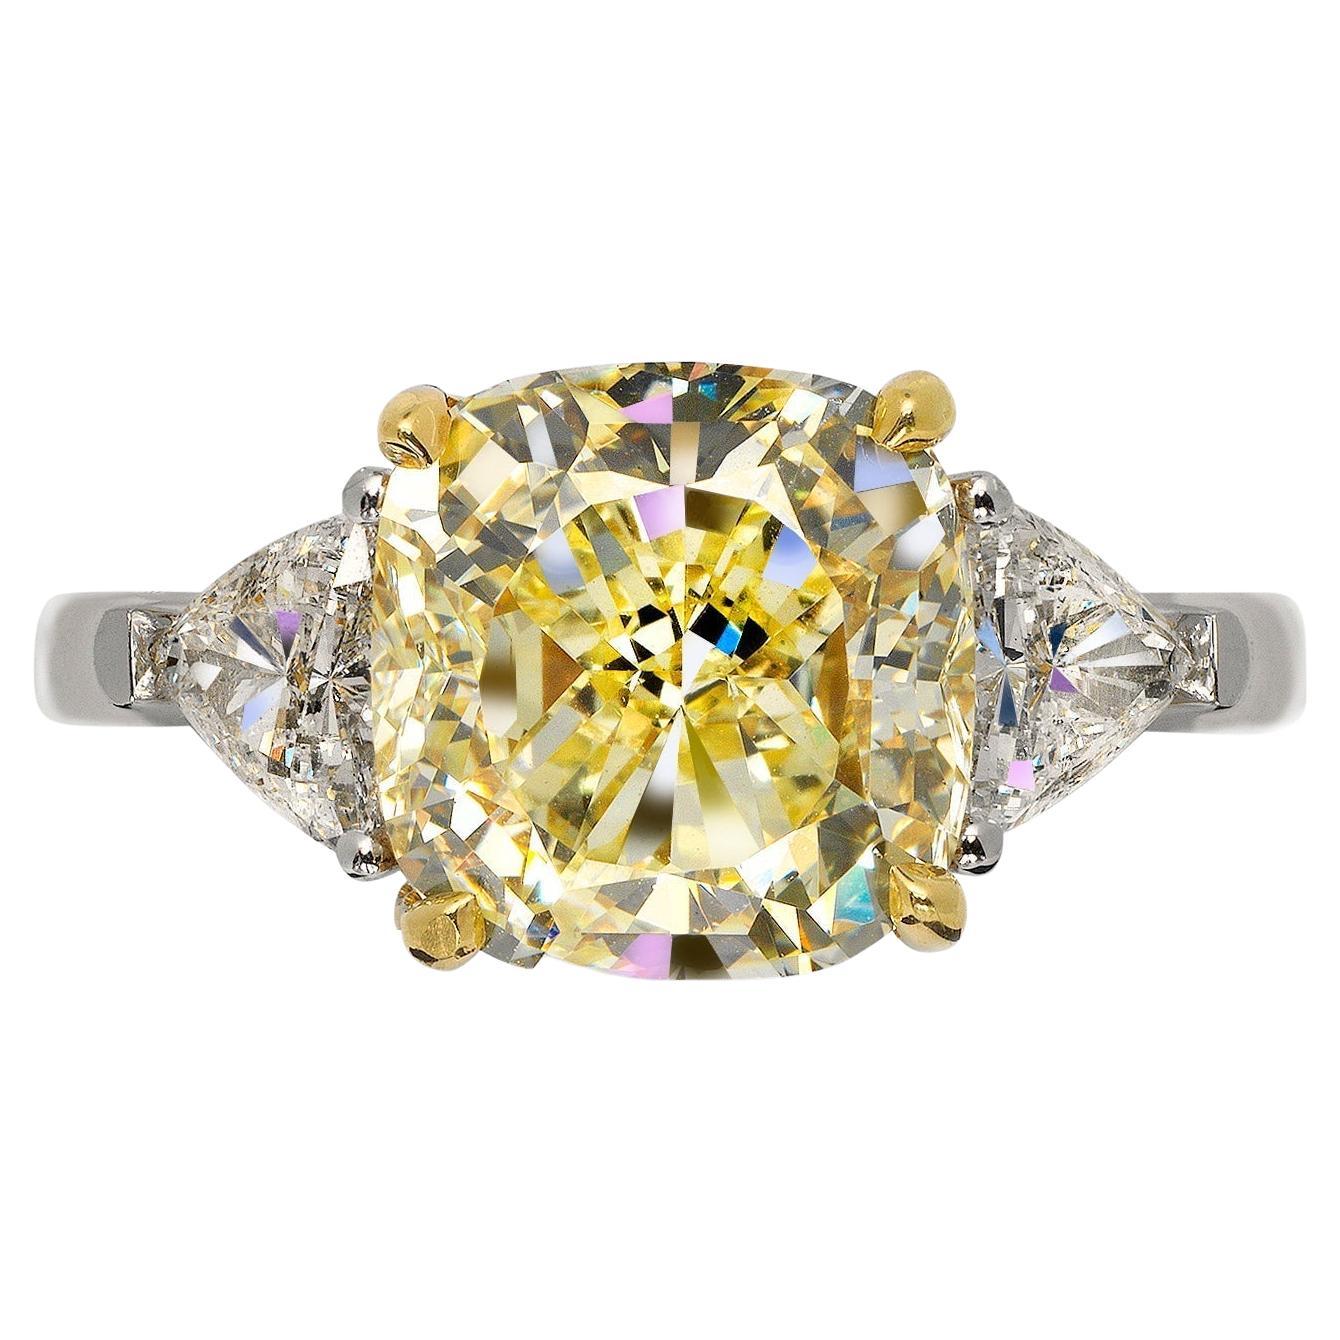 5 Carat Cushion Cut Diamond Engagement Ring GIA Certified NFY VS1